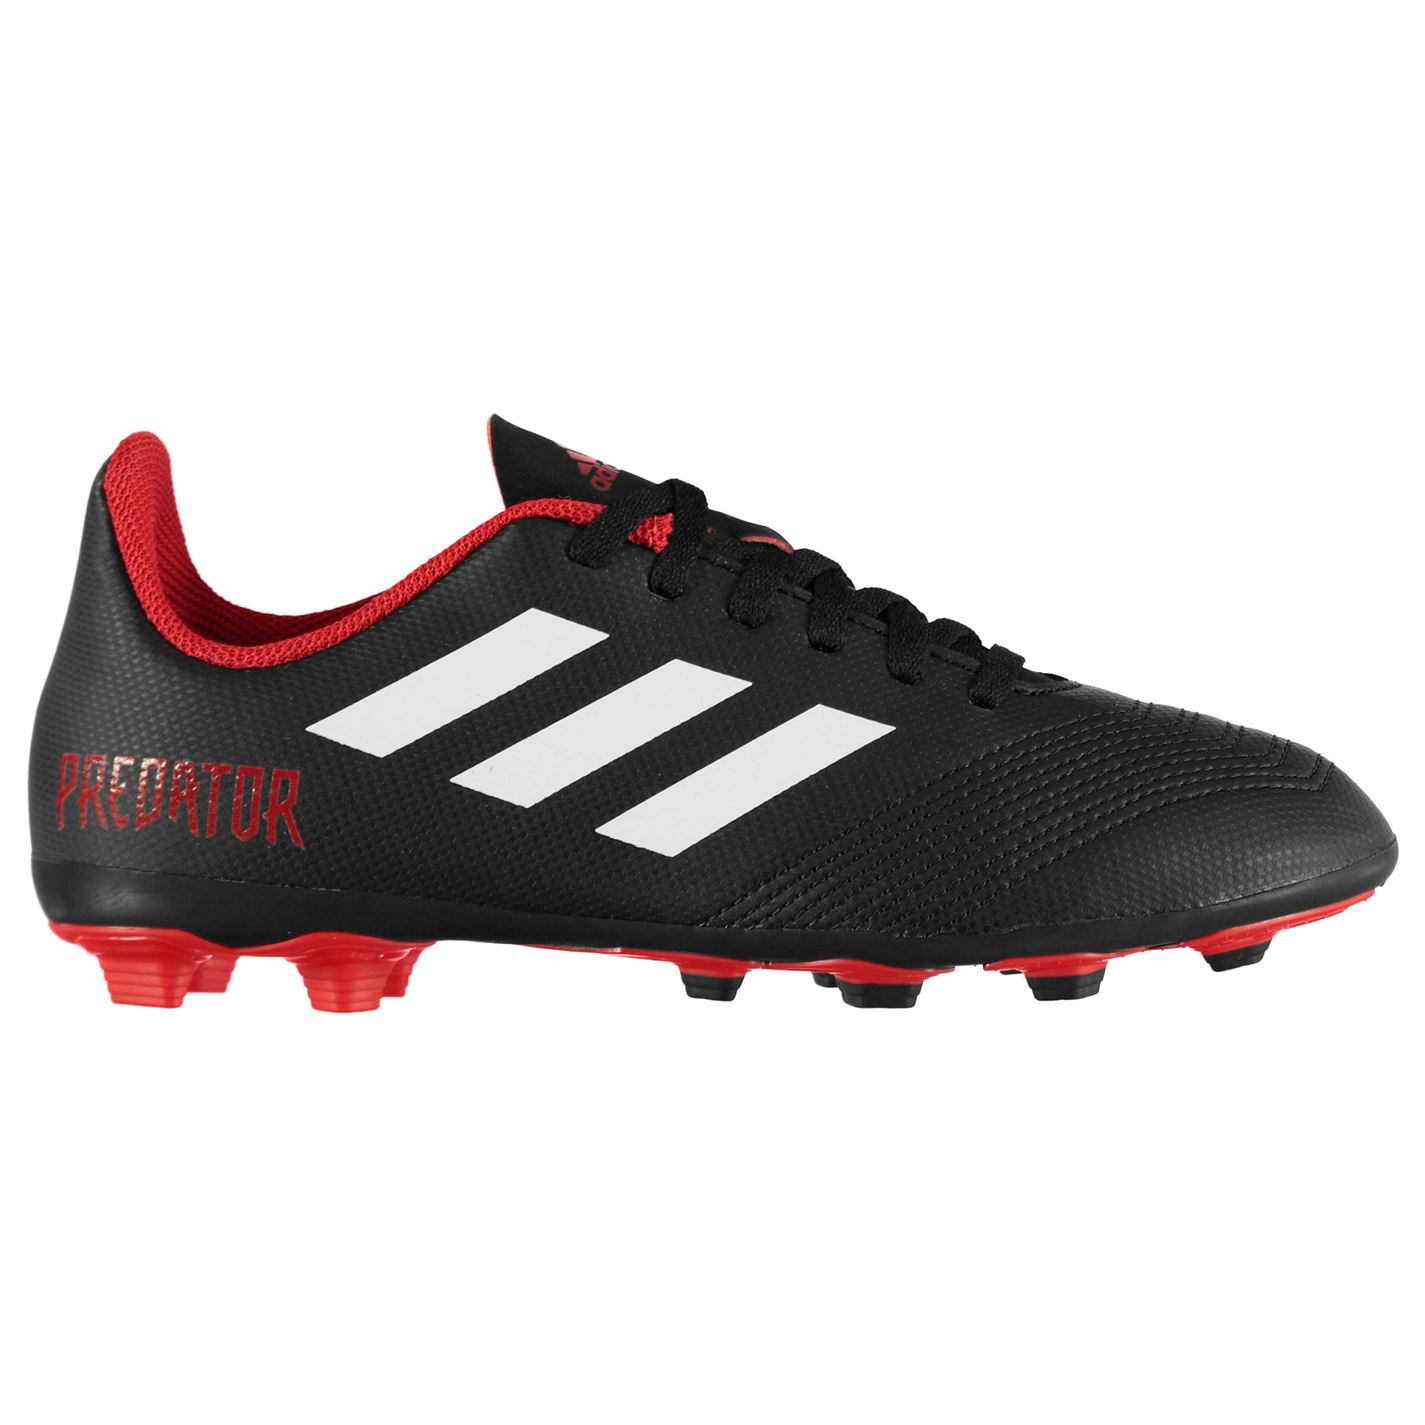 Adidas Predator 18.4 Junior FG Football Boots